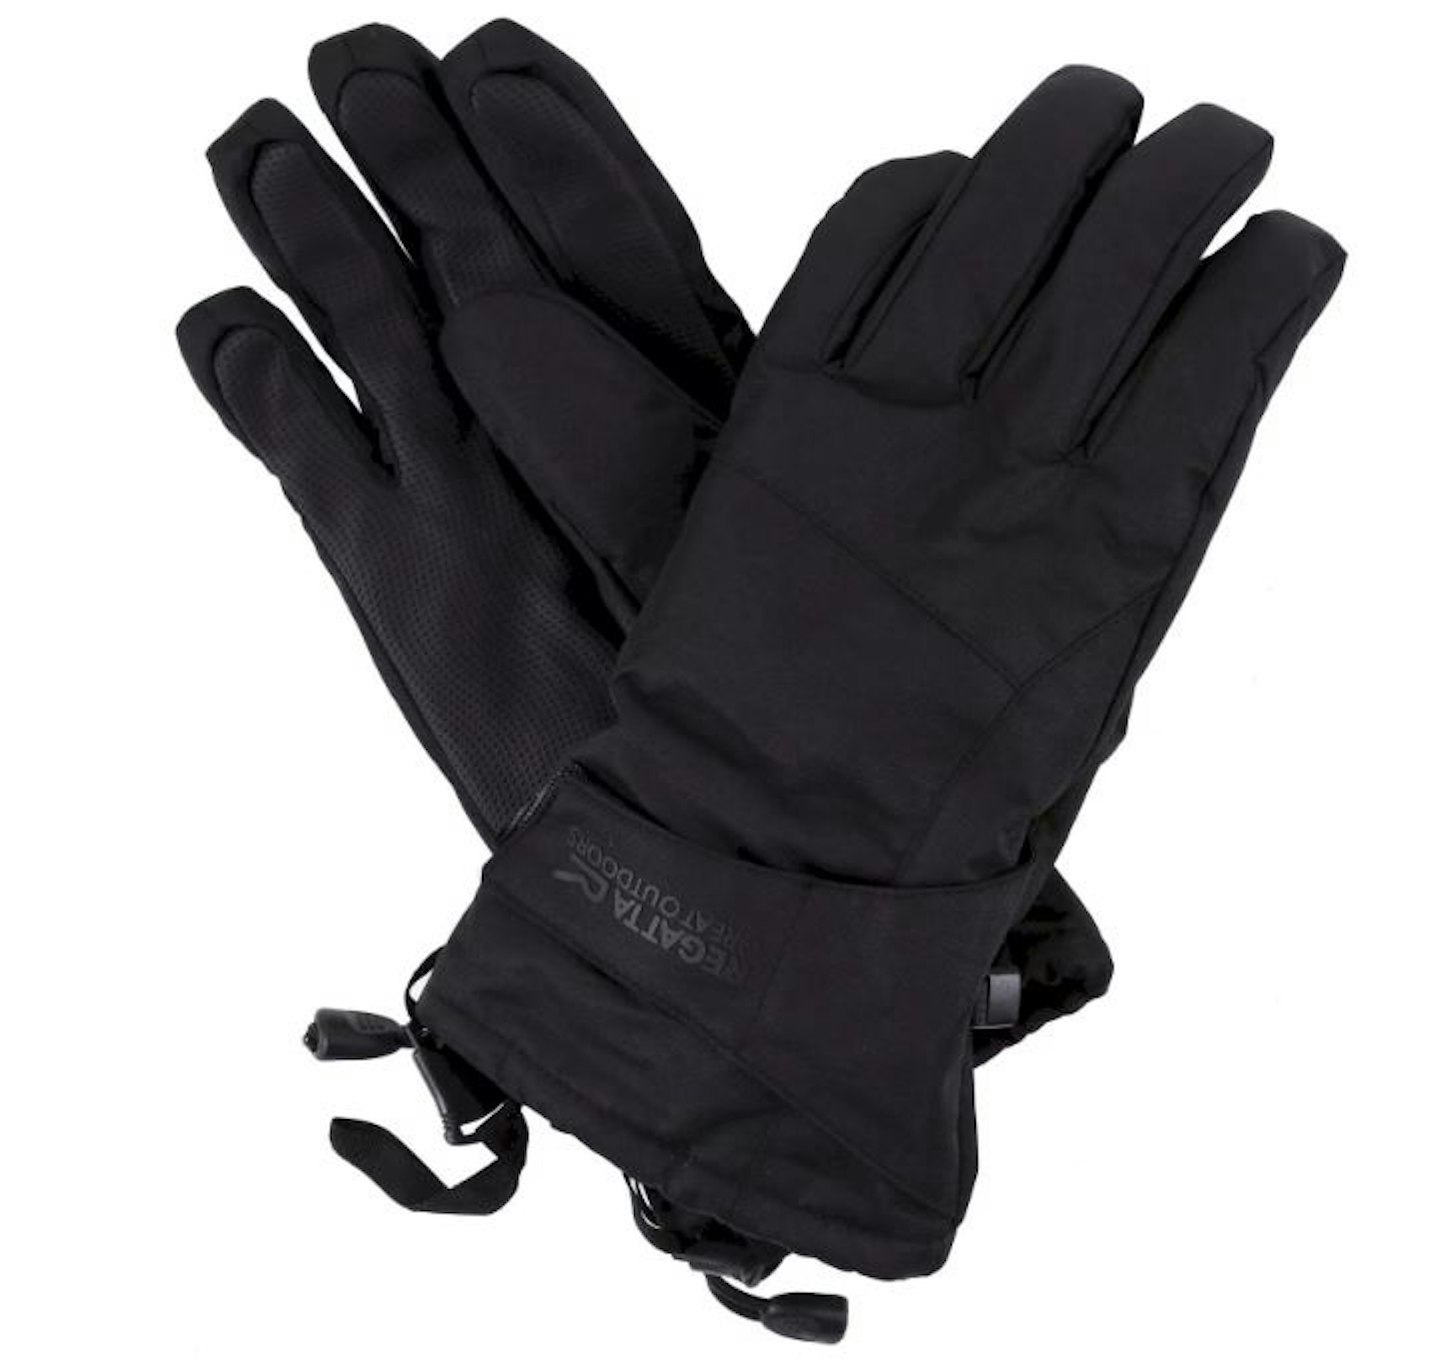 Regatta Transition III Waterproof Glove